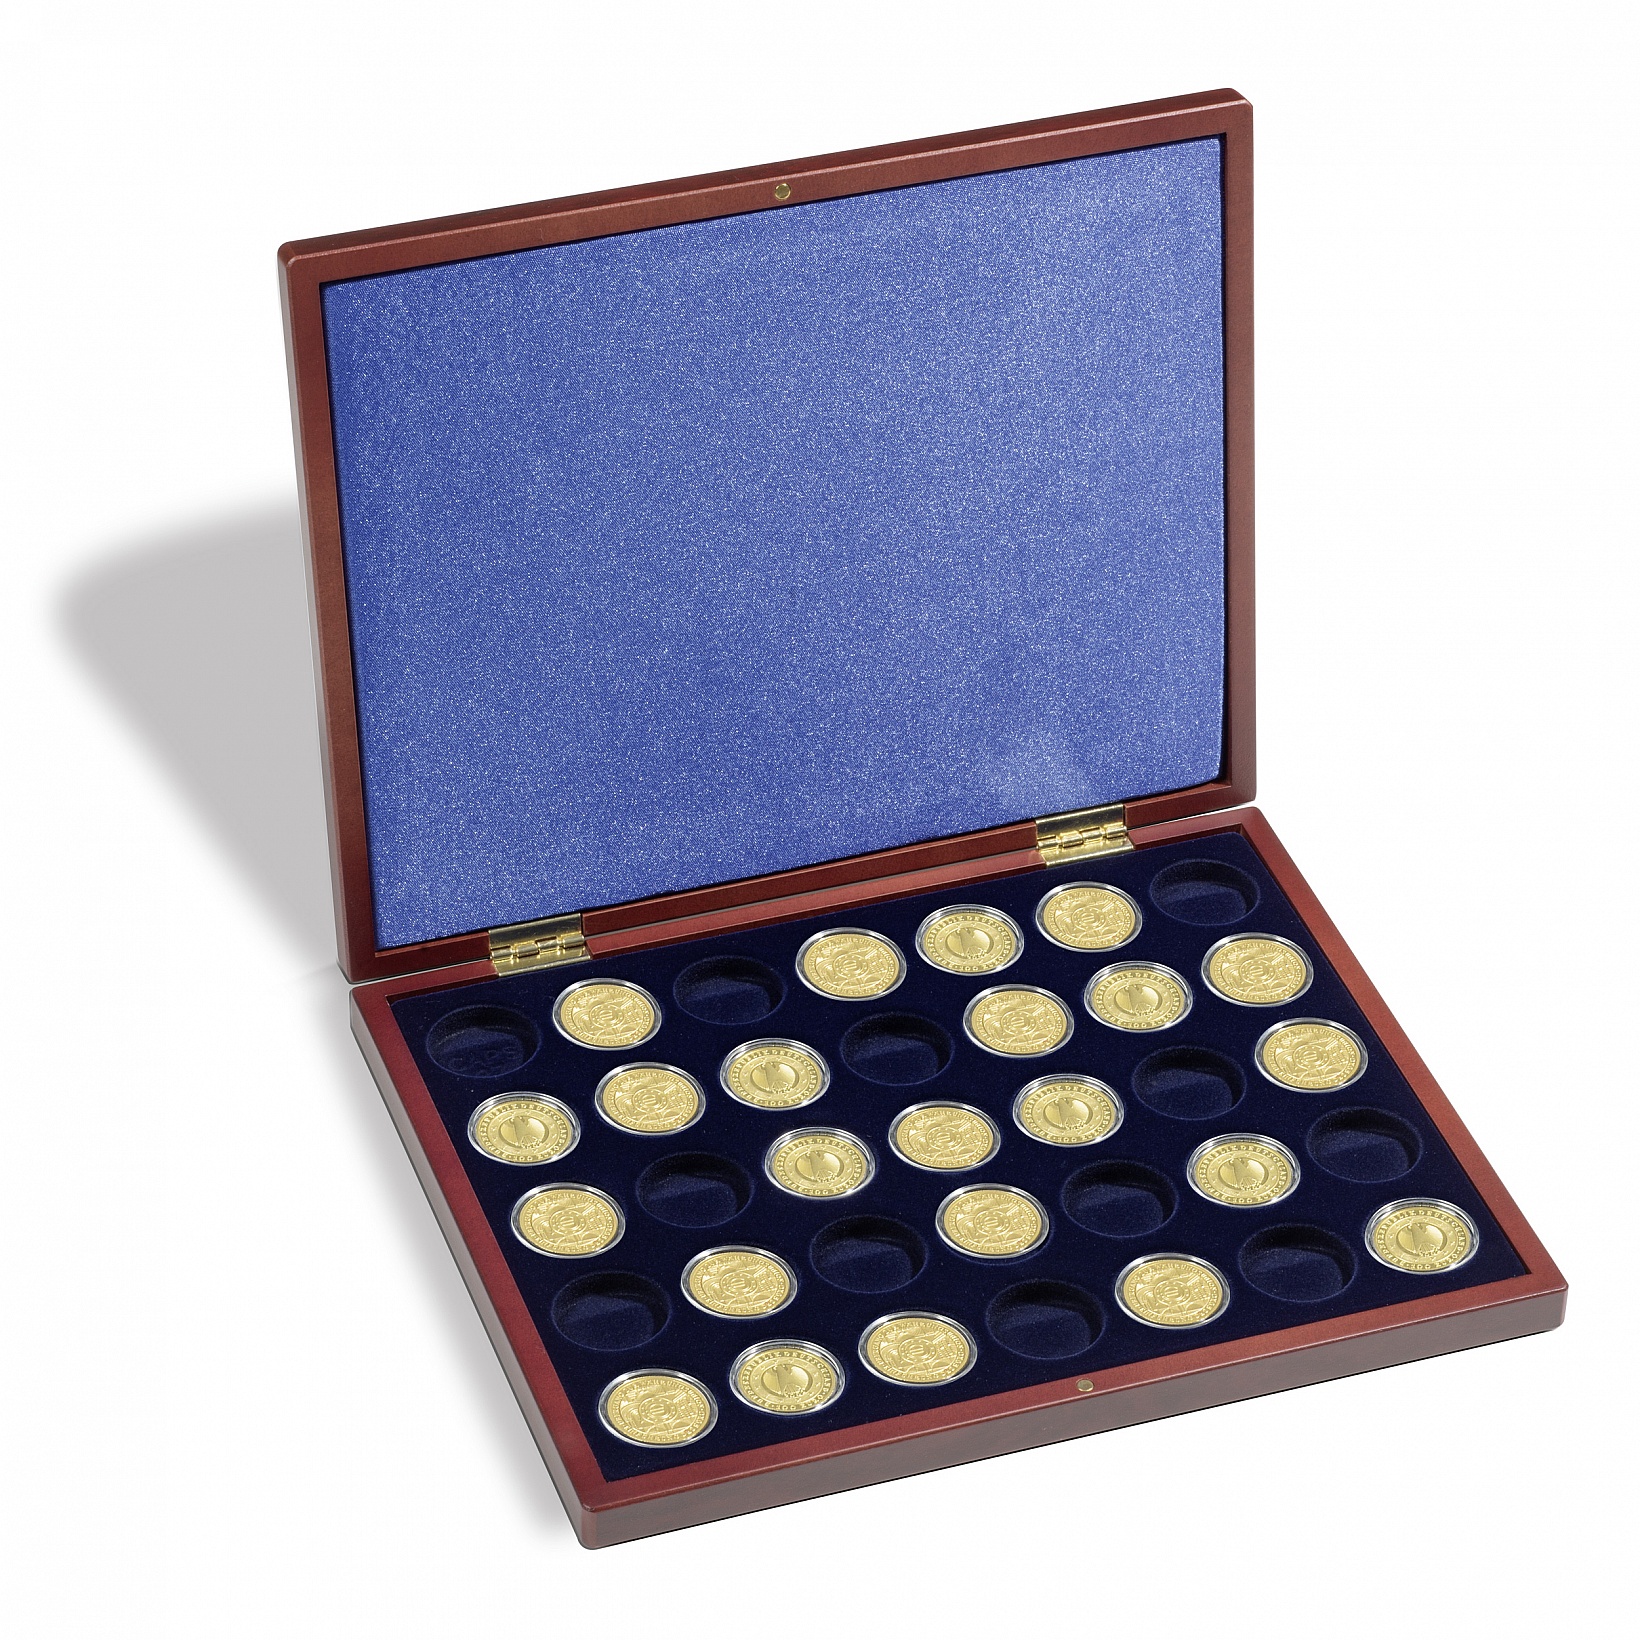 Kazeta VOLTERRA UNO de Luxe, 35x 100 € zlaté nemecké mince  (HMKCAPS27)